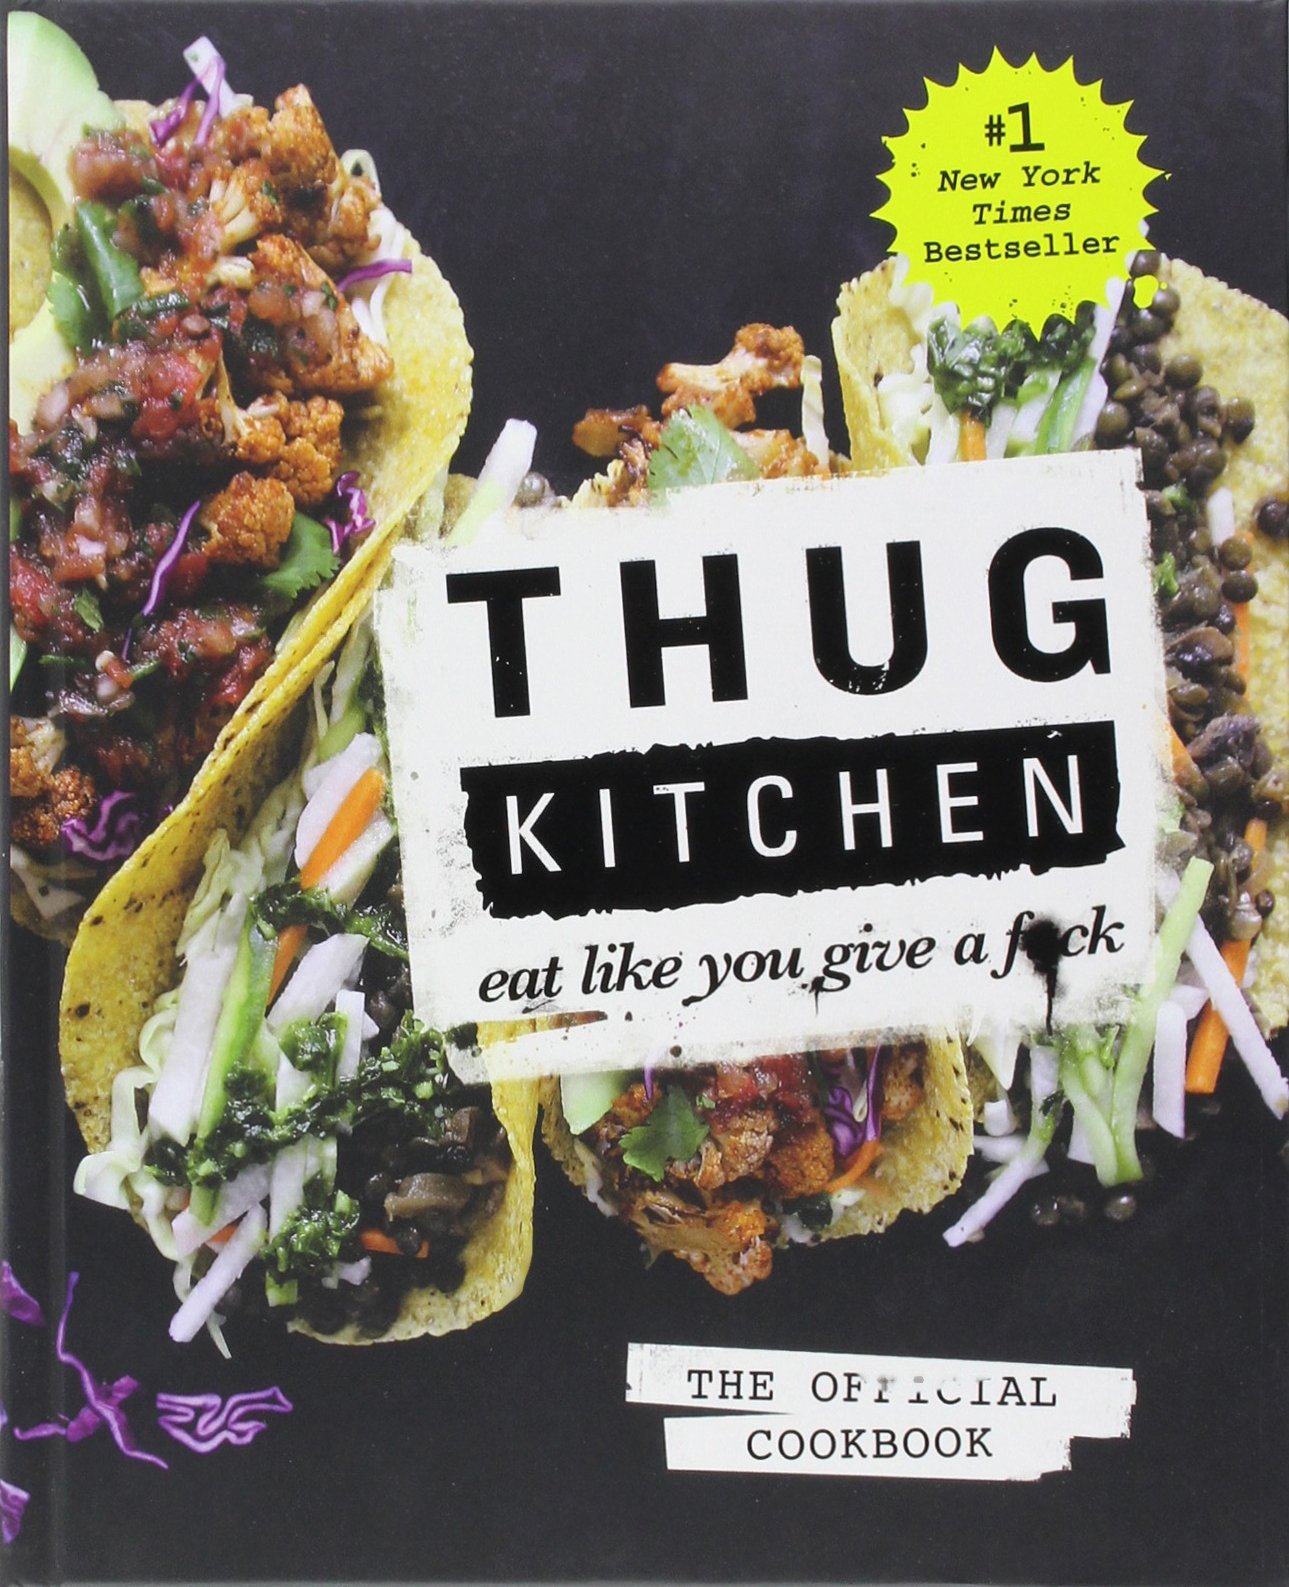 Thug Kitchen - Thug Kitchen - East Like You Give a F*ck